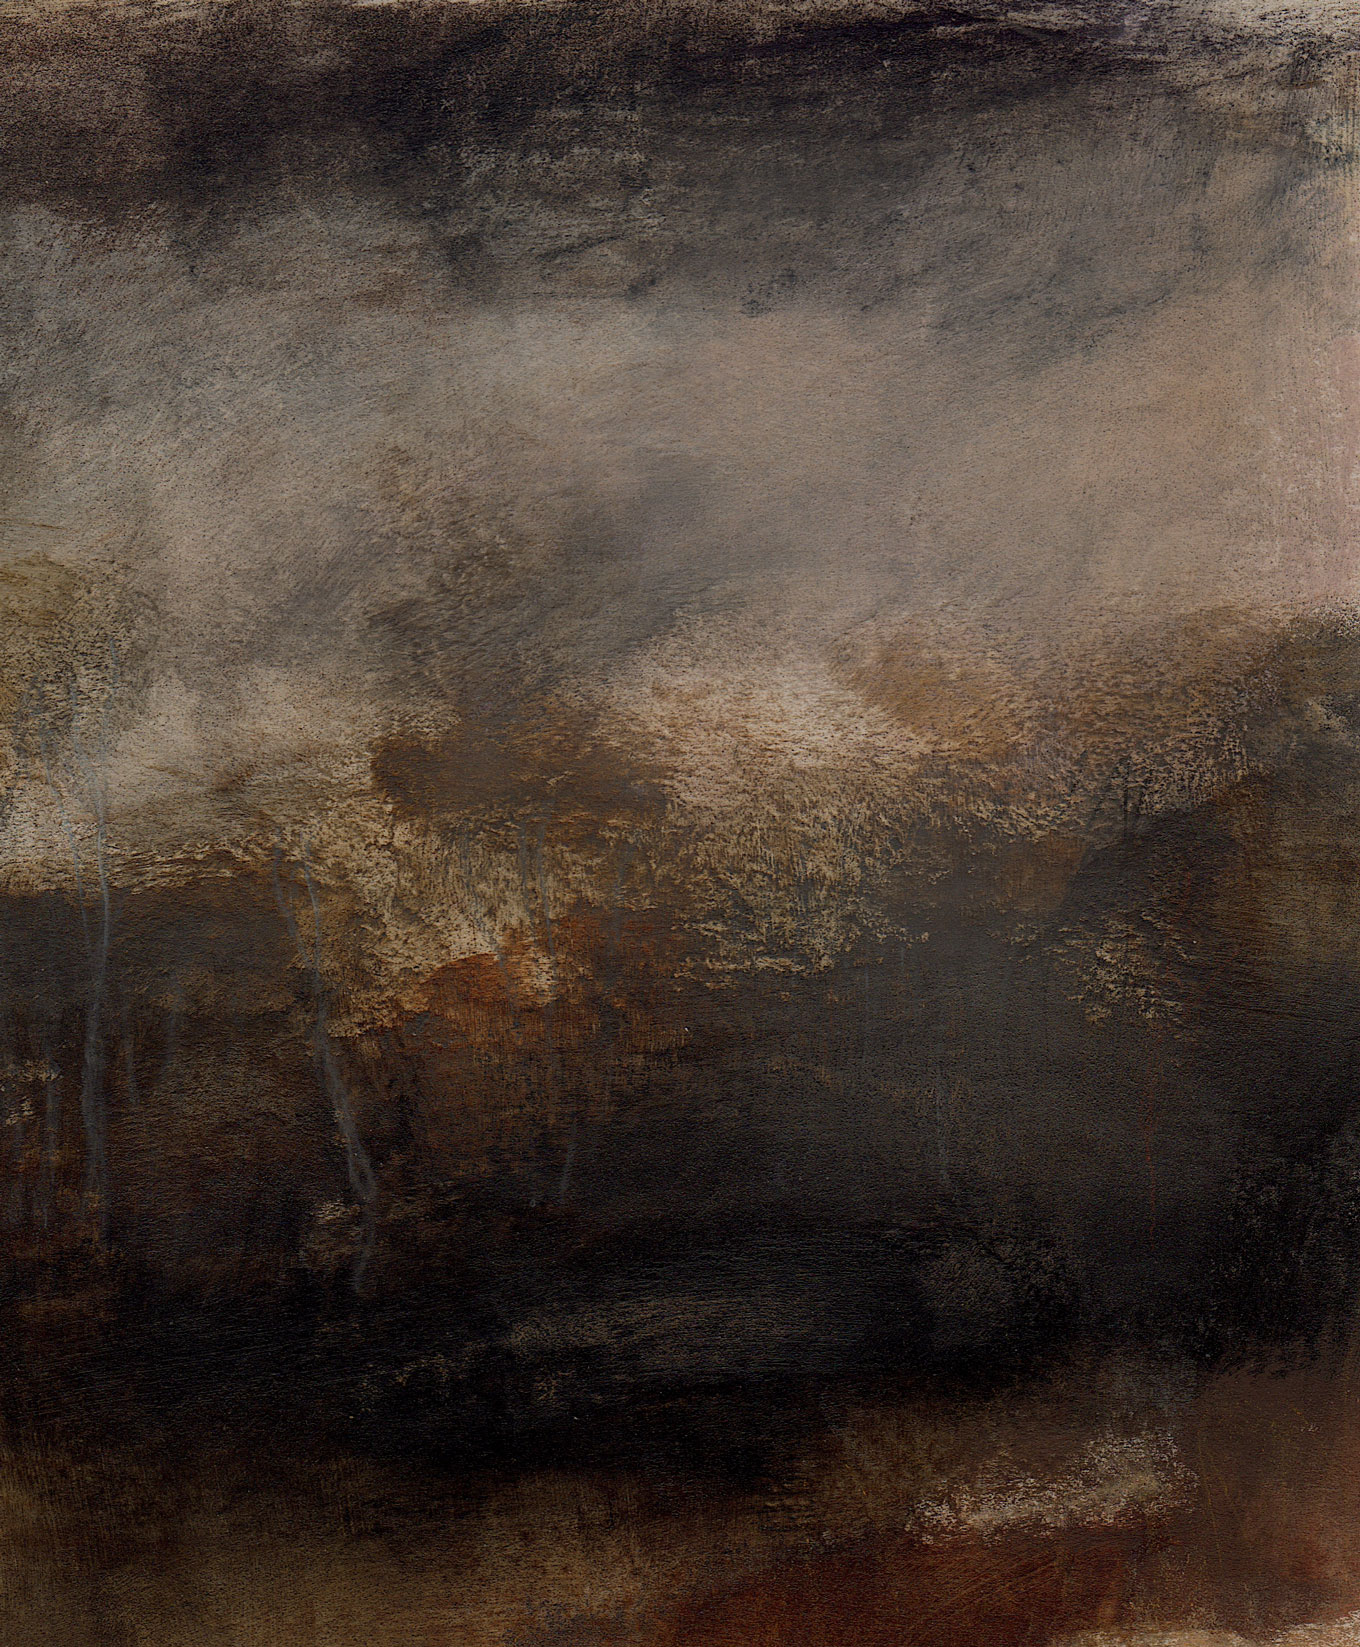 L1209 - Nicholas Herbert, British Artist, mixed media landscape painting of Chobham Common, mixed media on paper,2020